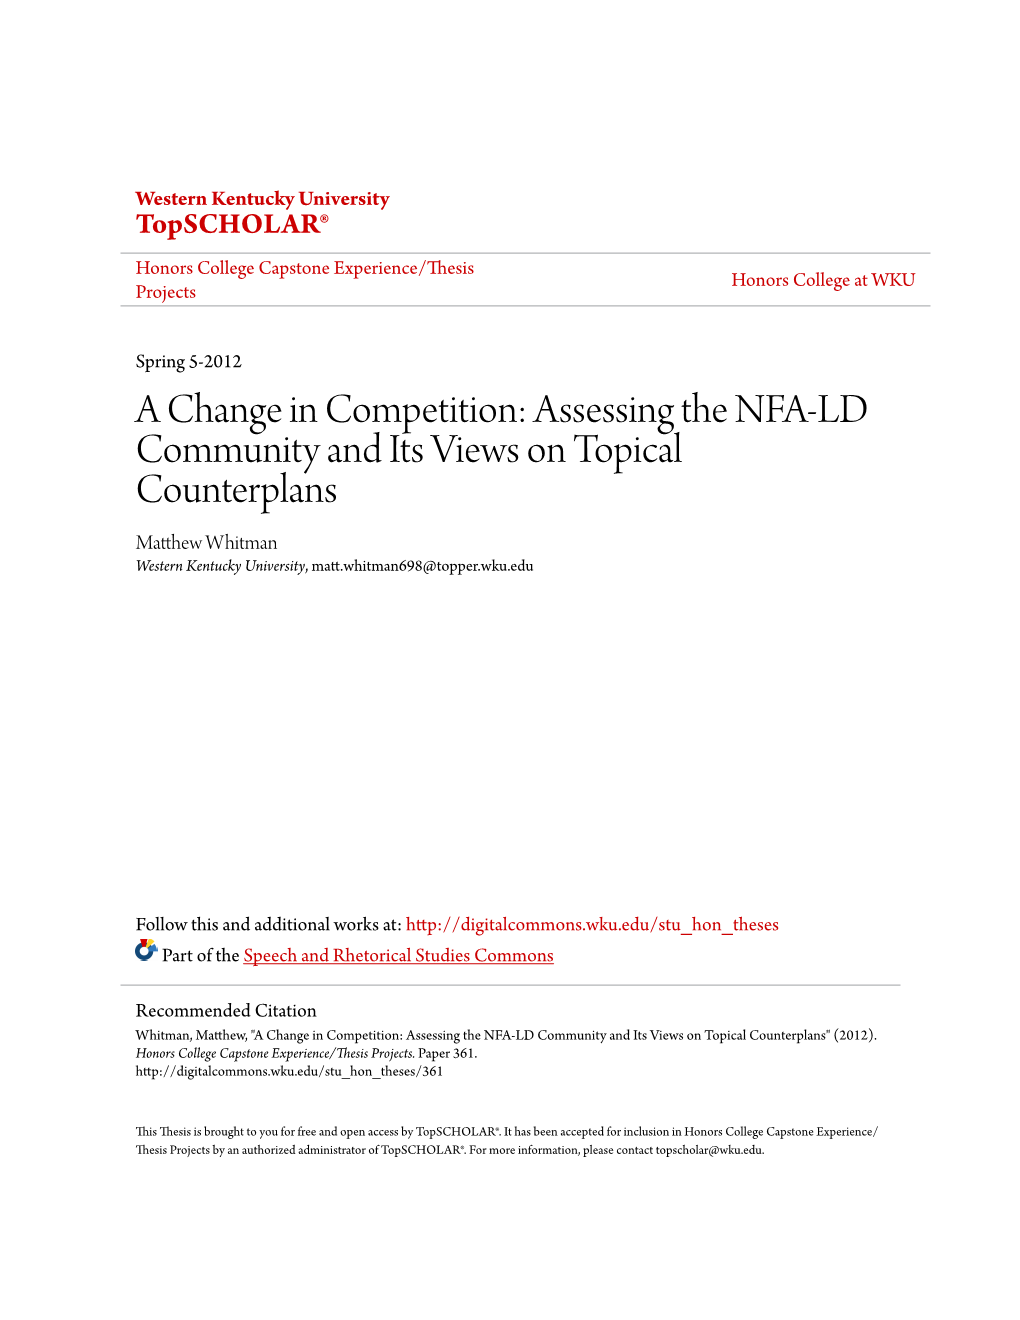 Assessing the NFA-LD Community and Its Views on Topical Counterplans Matthew Whitman Western Kentucky University, Matt.Whitman698@Topper.Wku.Edu